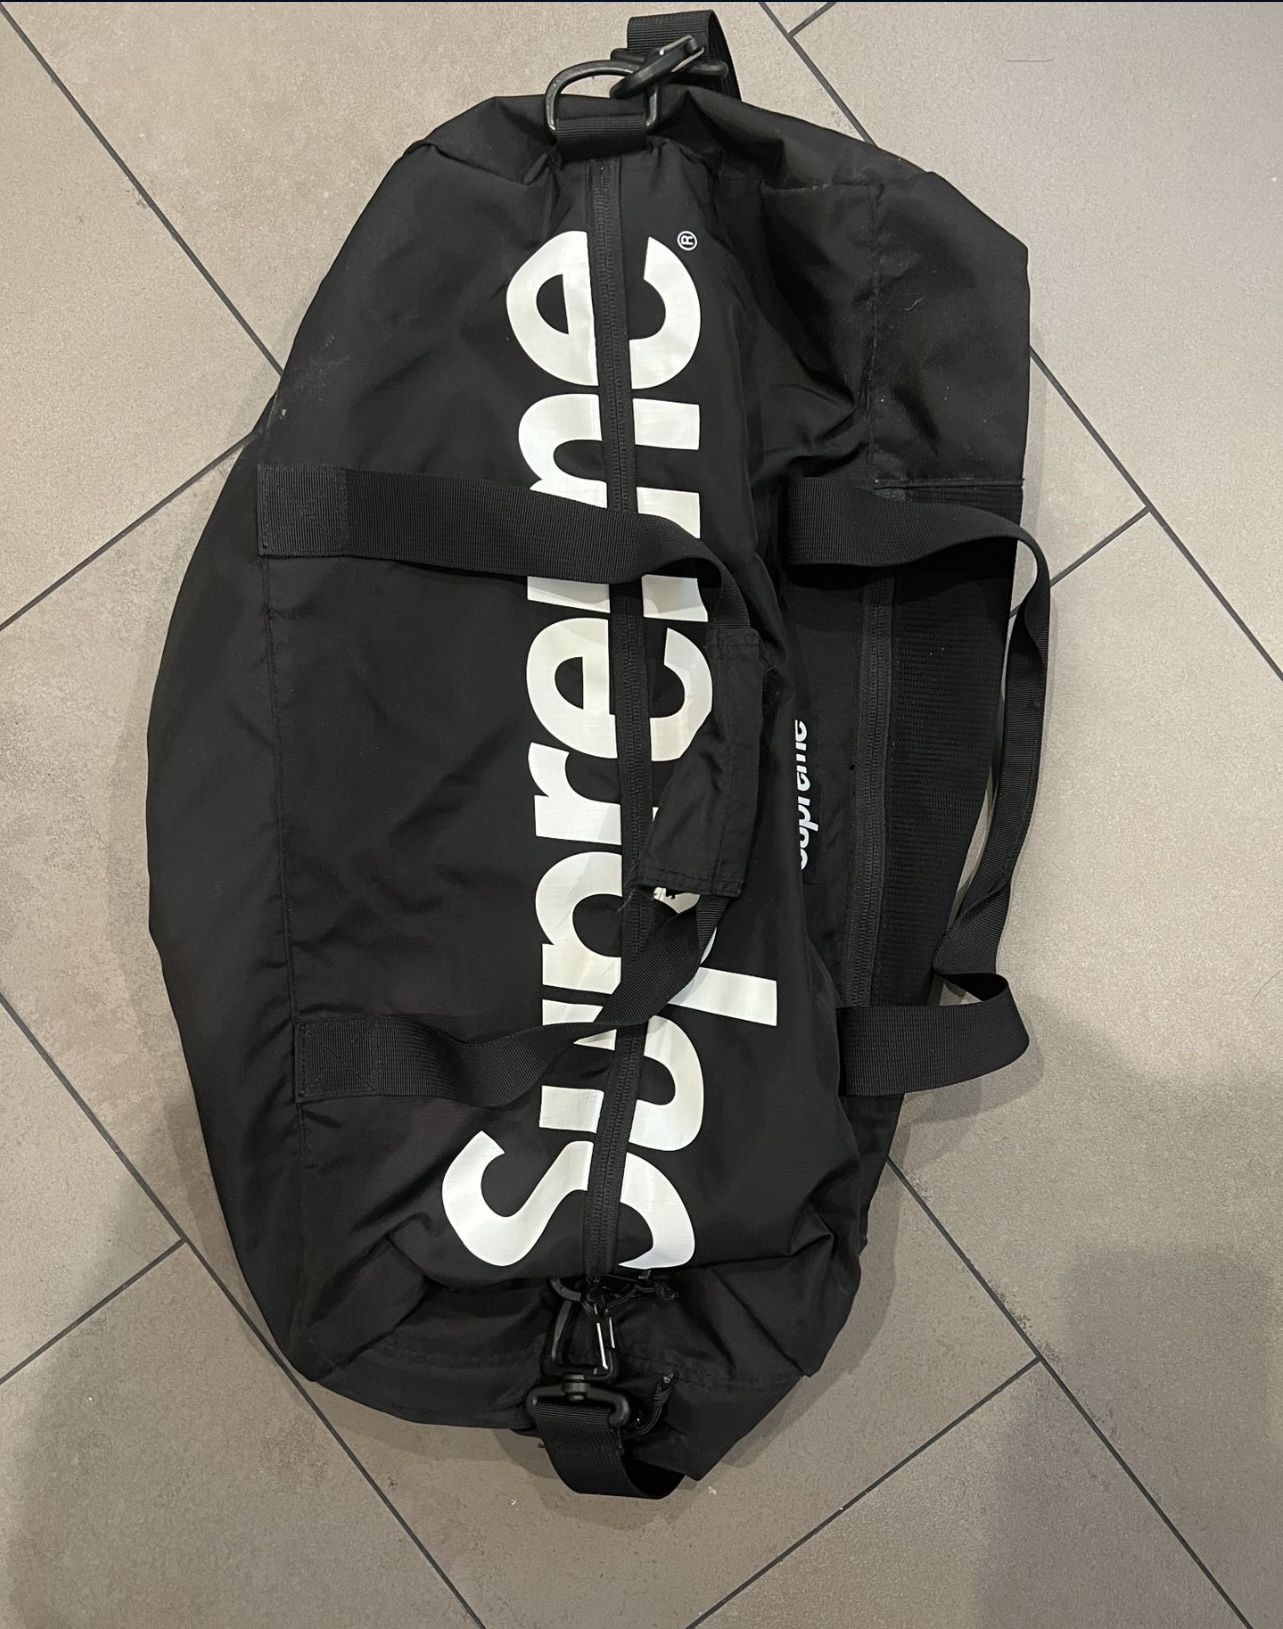 FS: Supreme SS17 Duffle Bag Black